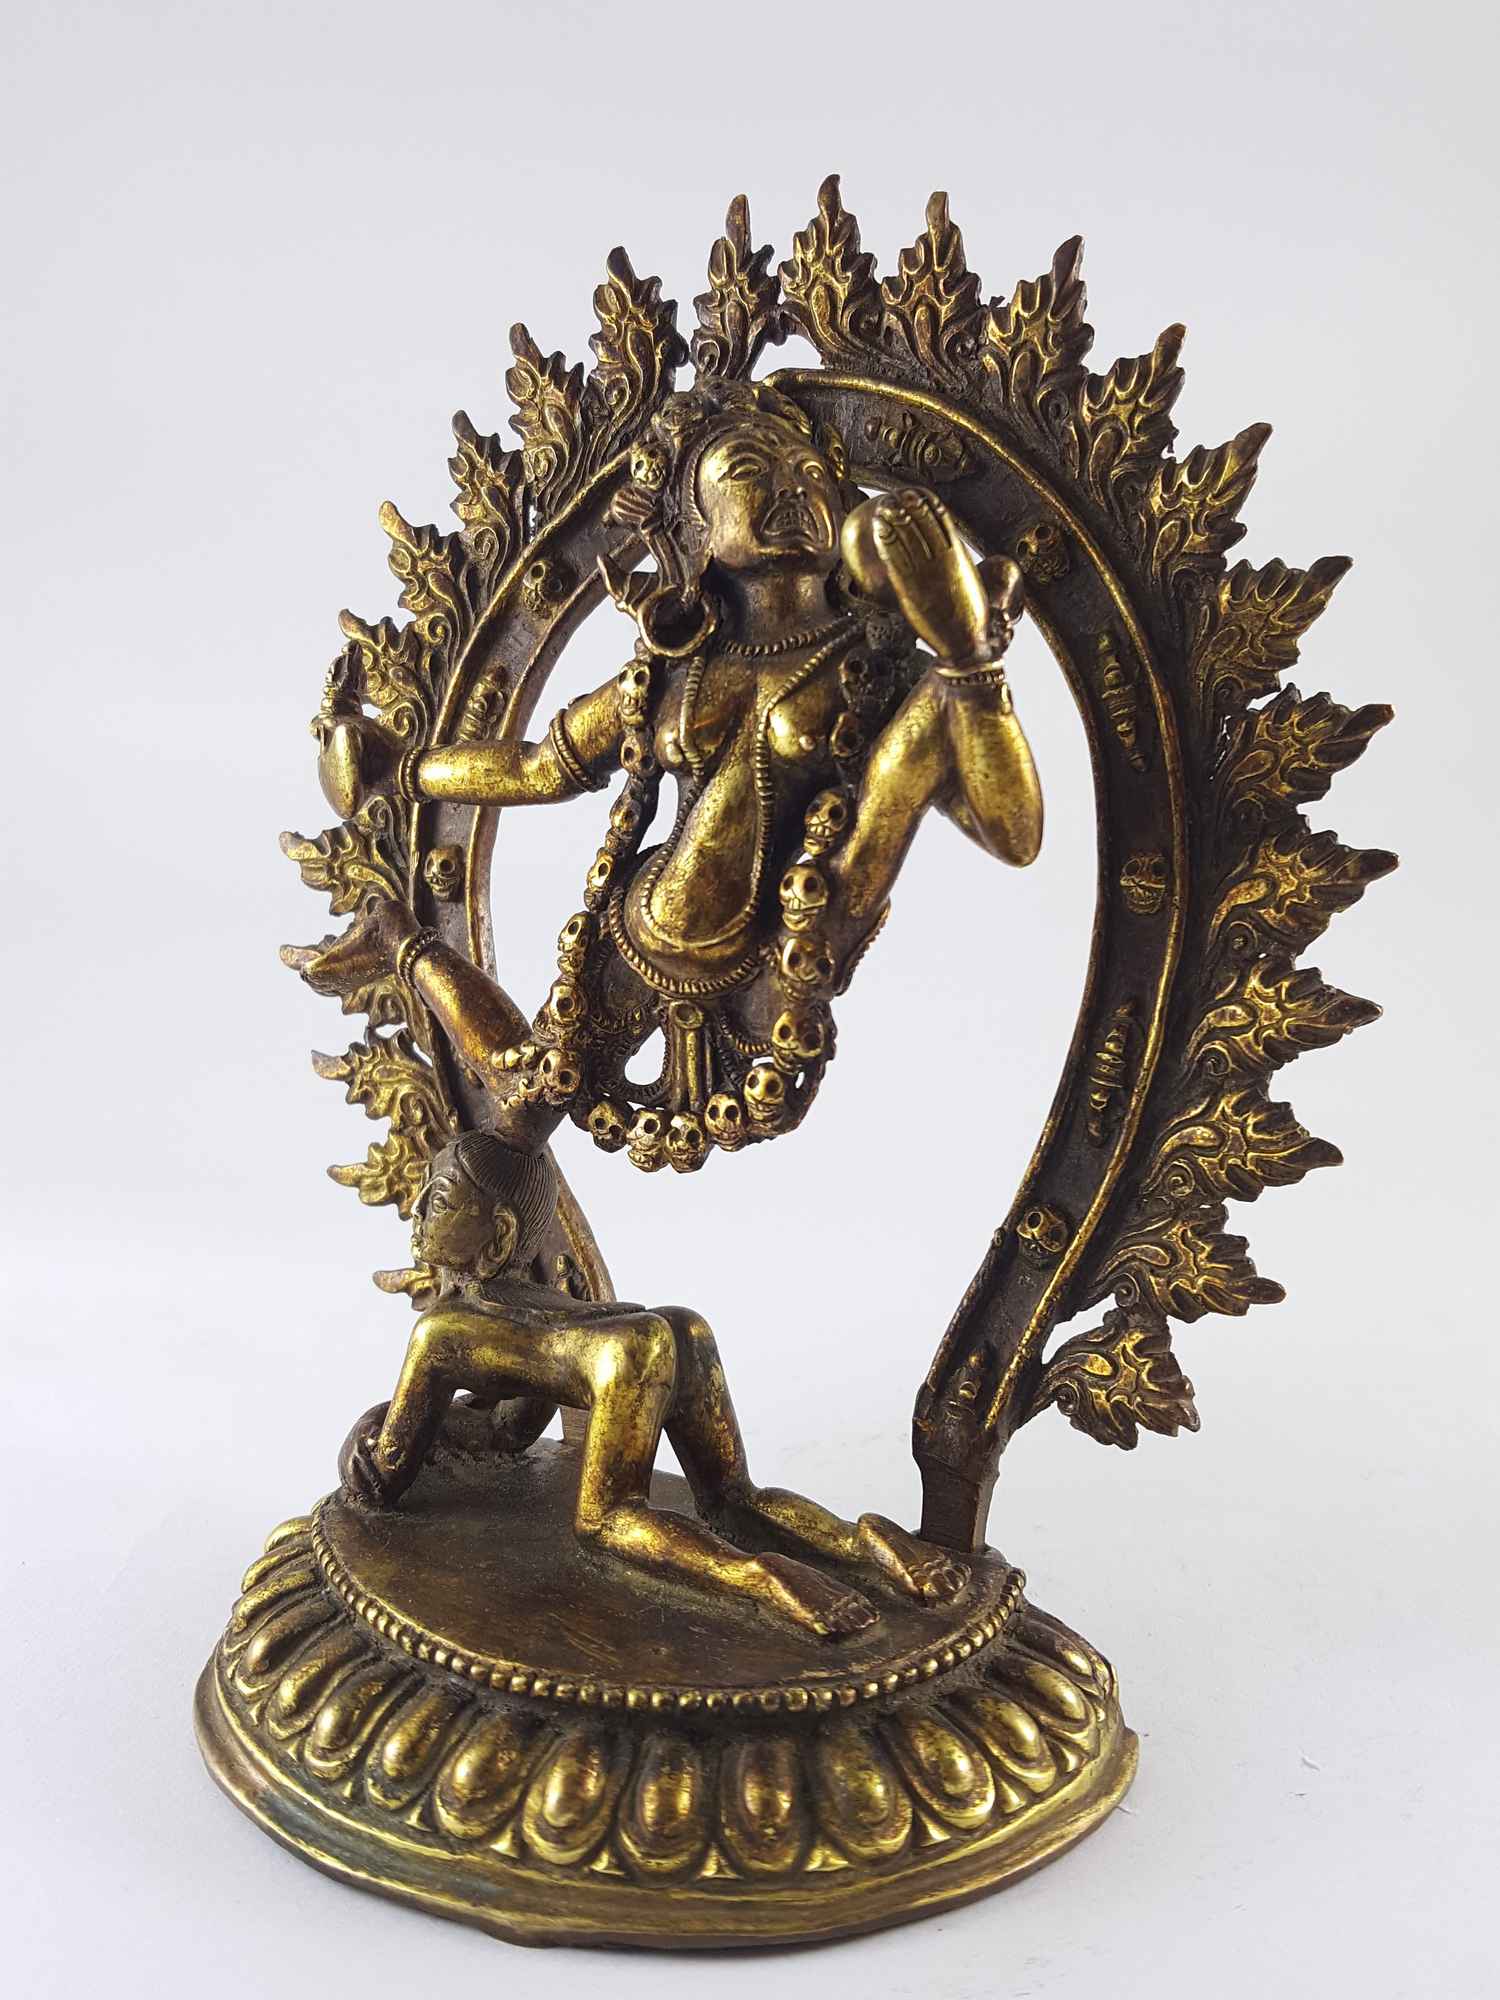 rare Find, Akash Yogini, Vidyadhari, Statue - Copper full Fire Gold Plated, antique Finishing.